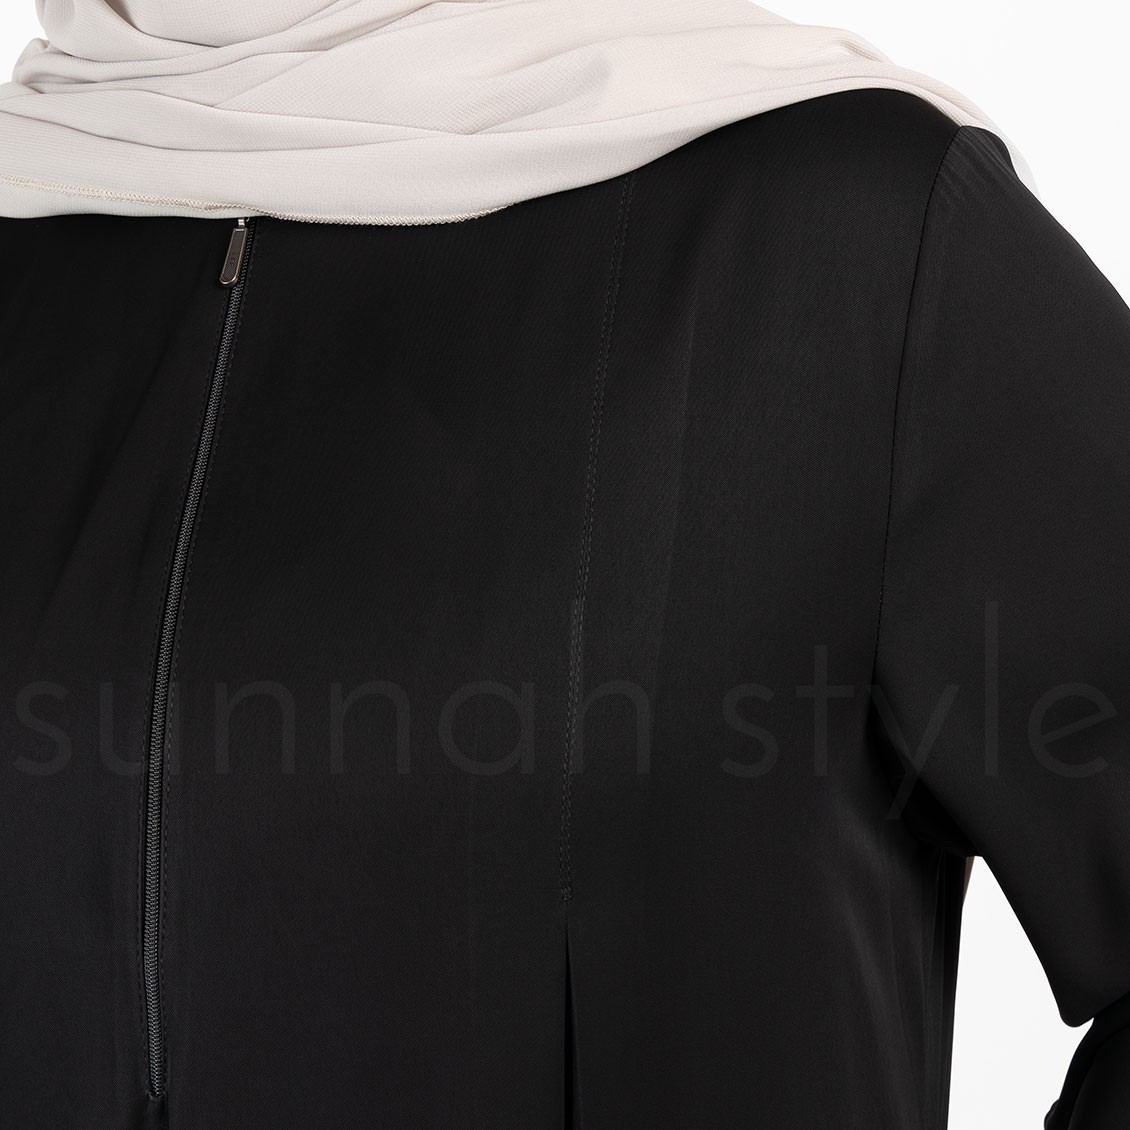 Sunnah Style Belle Umbrella Abaya Black